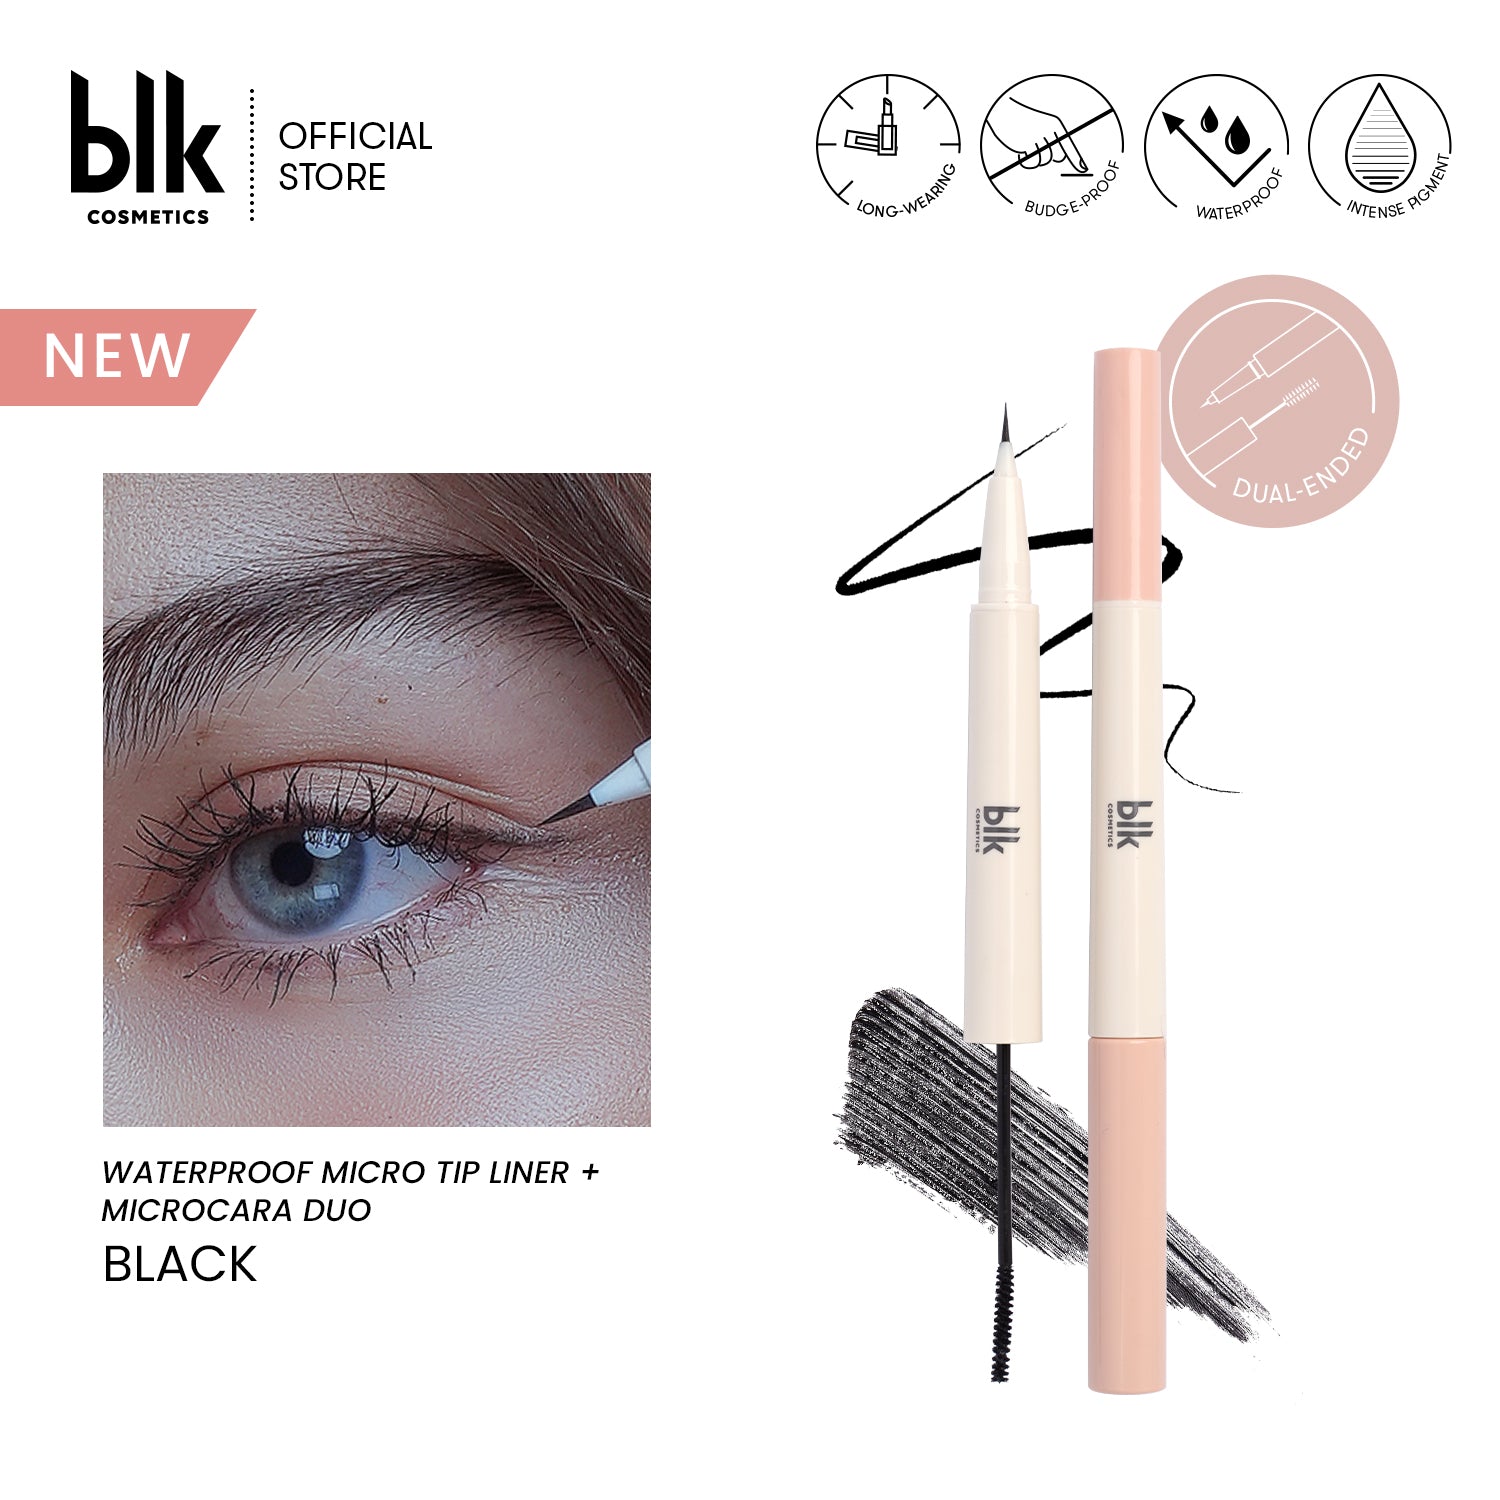 blk cosmetics daydream waterproof micro tip liner + microcara duo